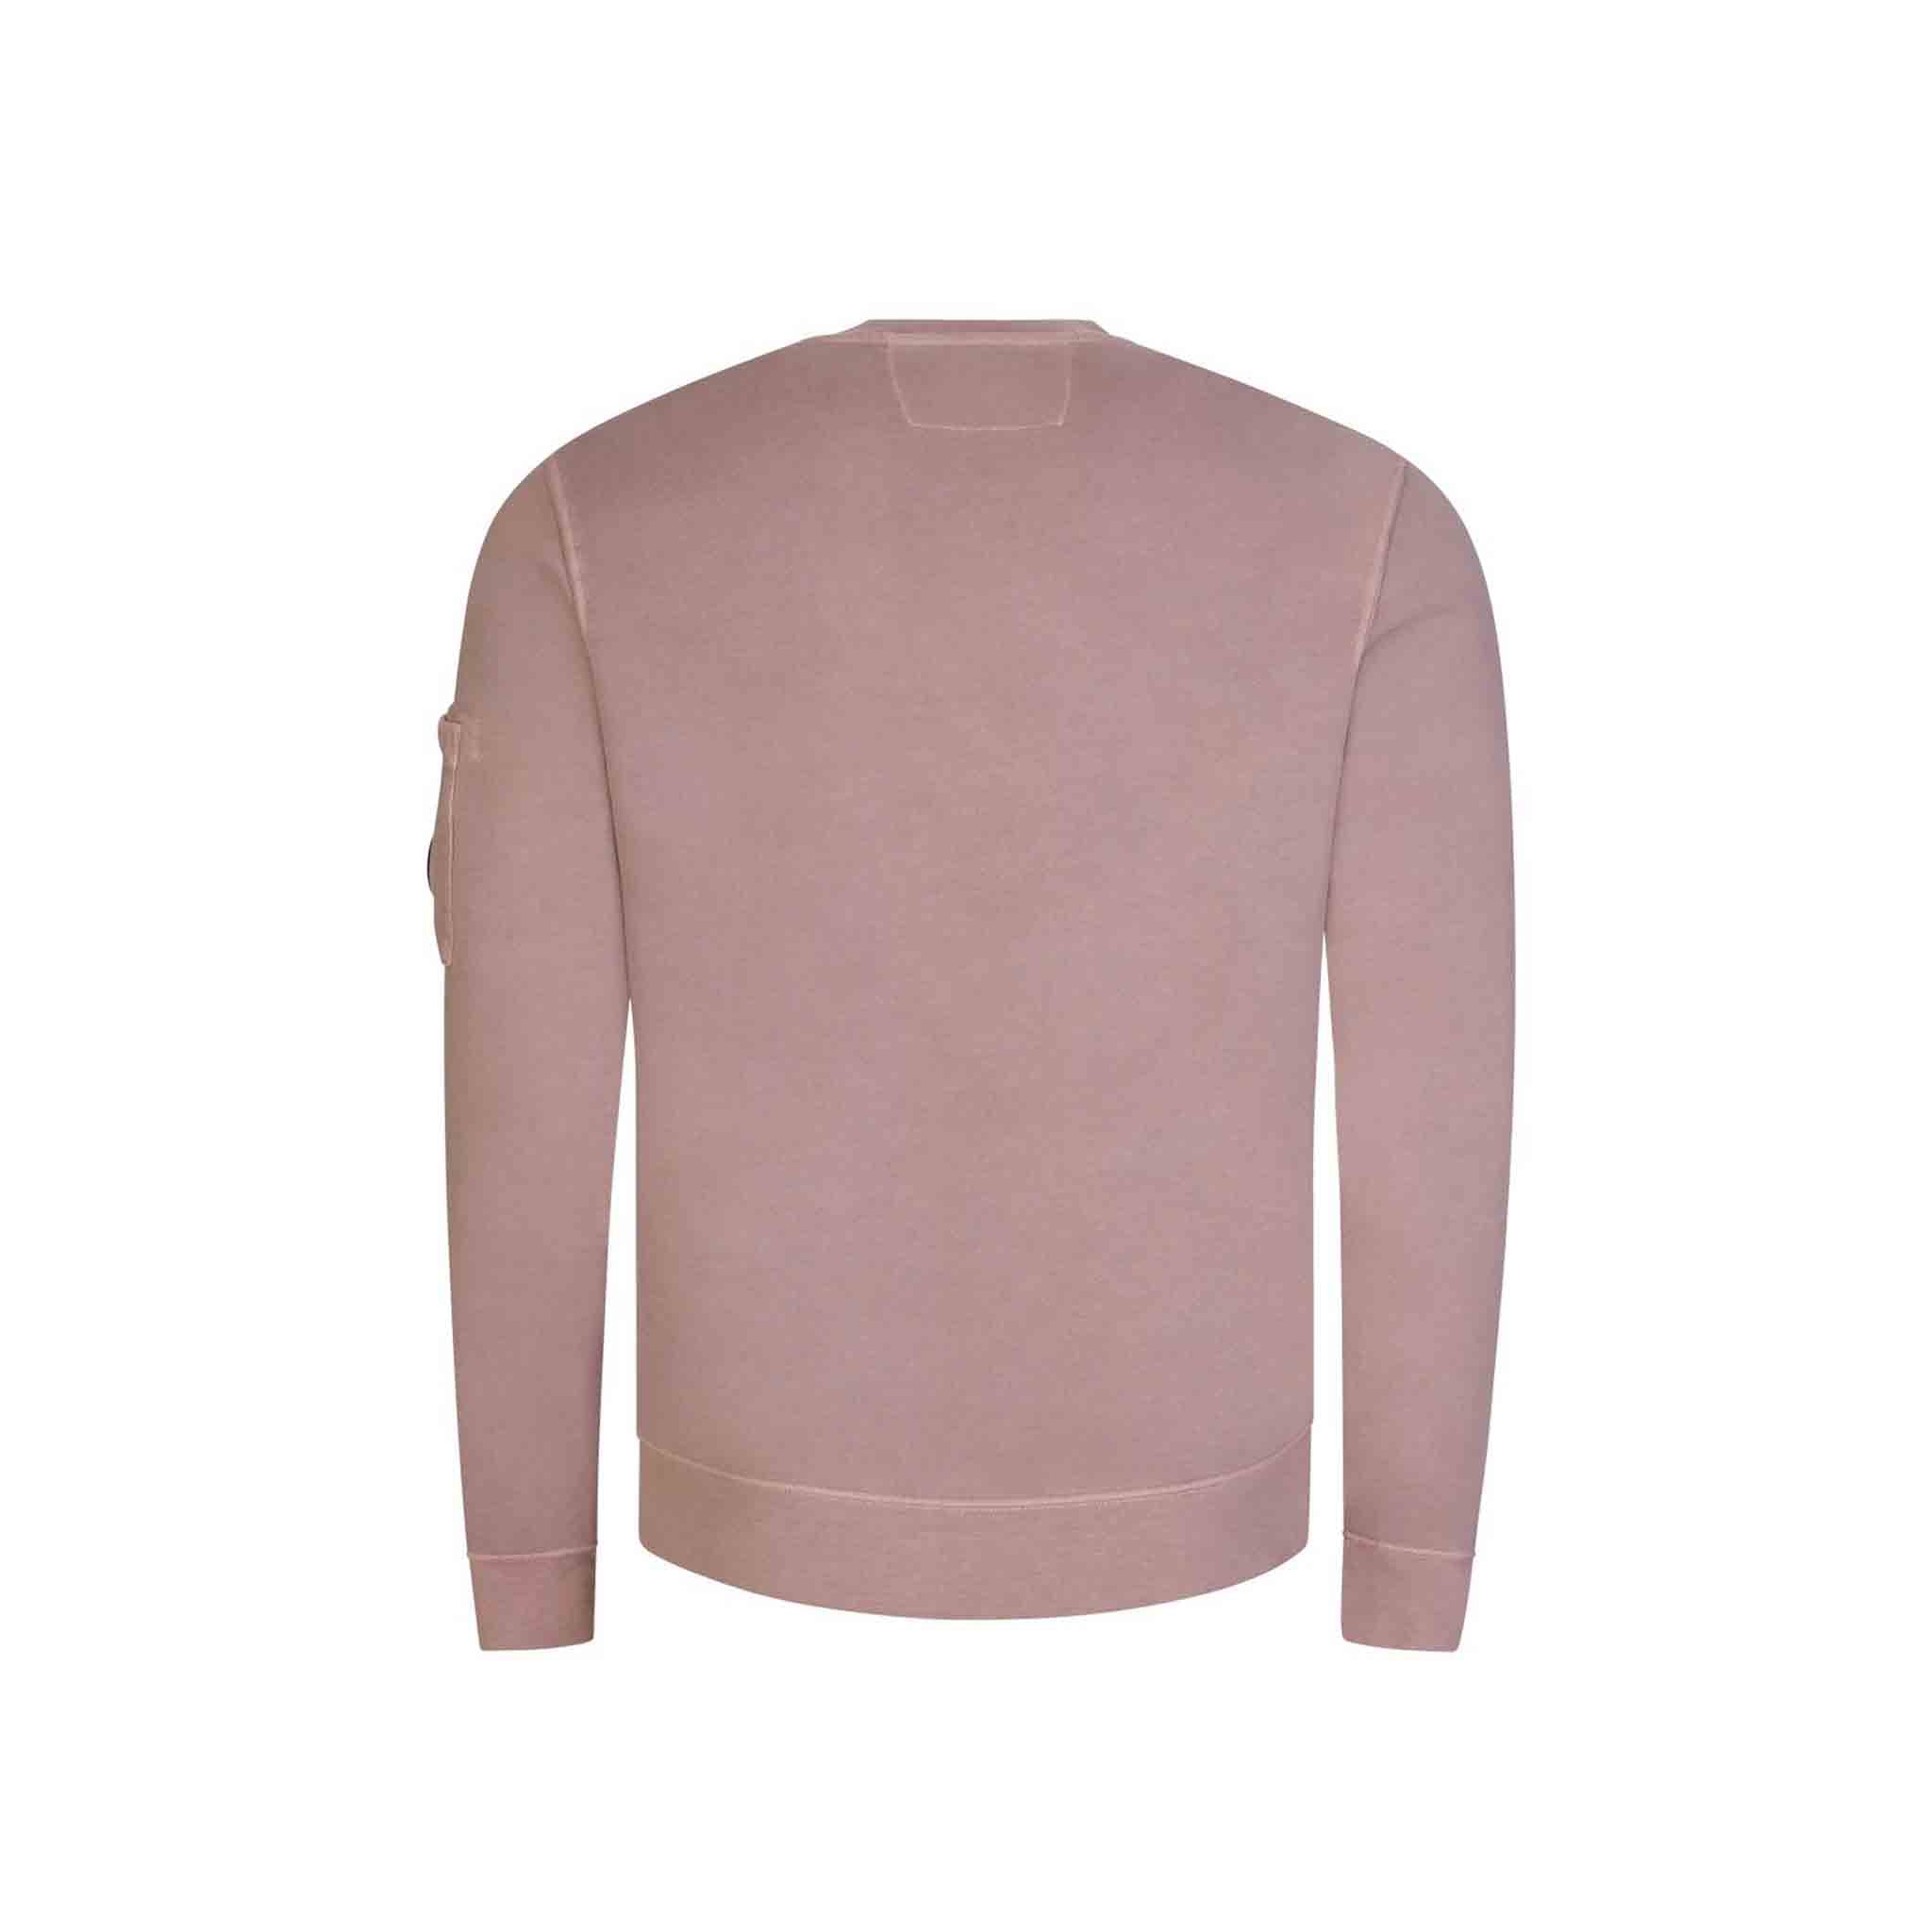 C.P. Company Resist Dyed Sweatshirt in Dusty Pink